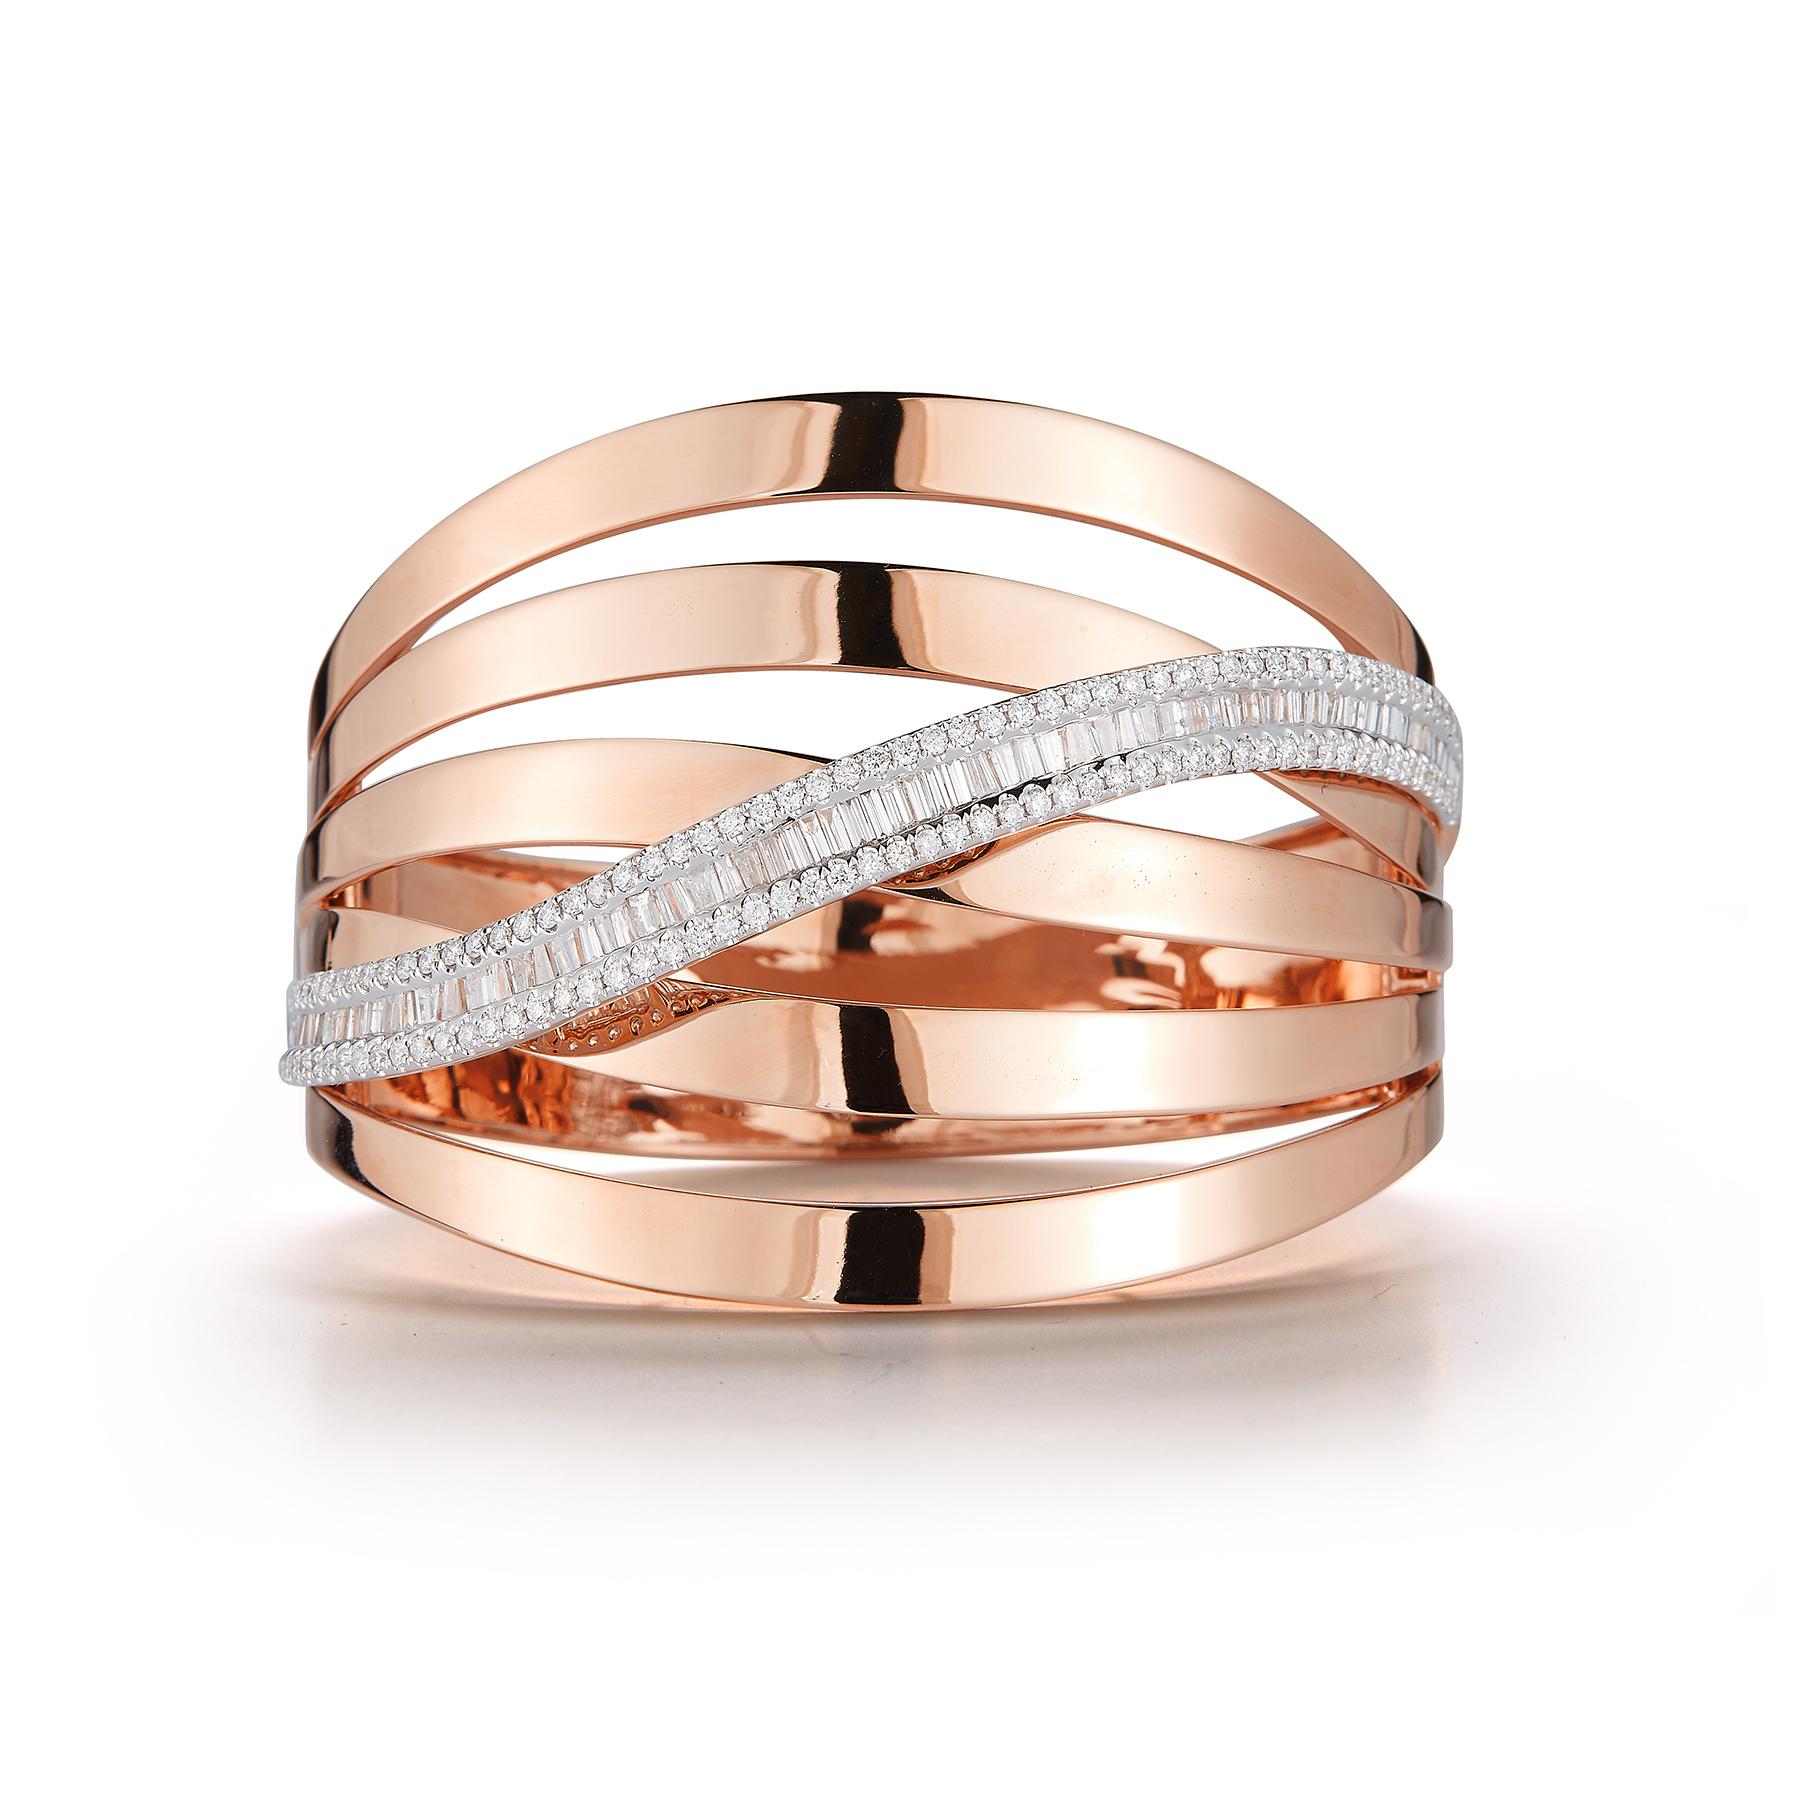 pink cuff bracelet